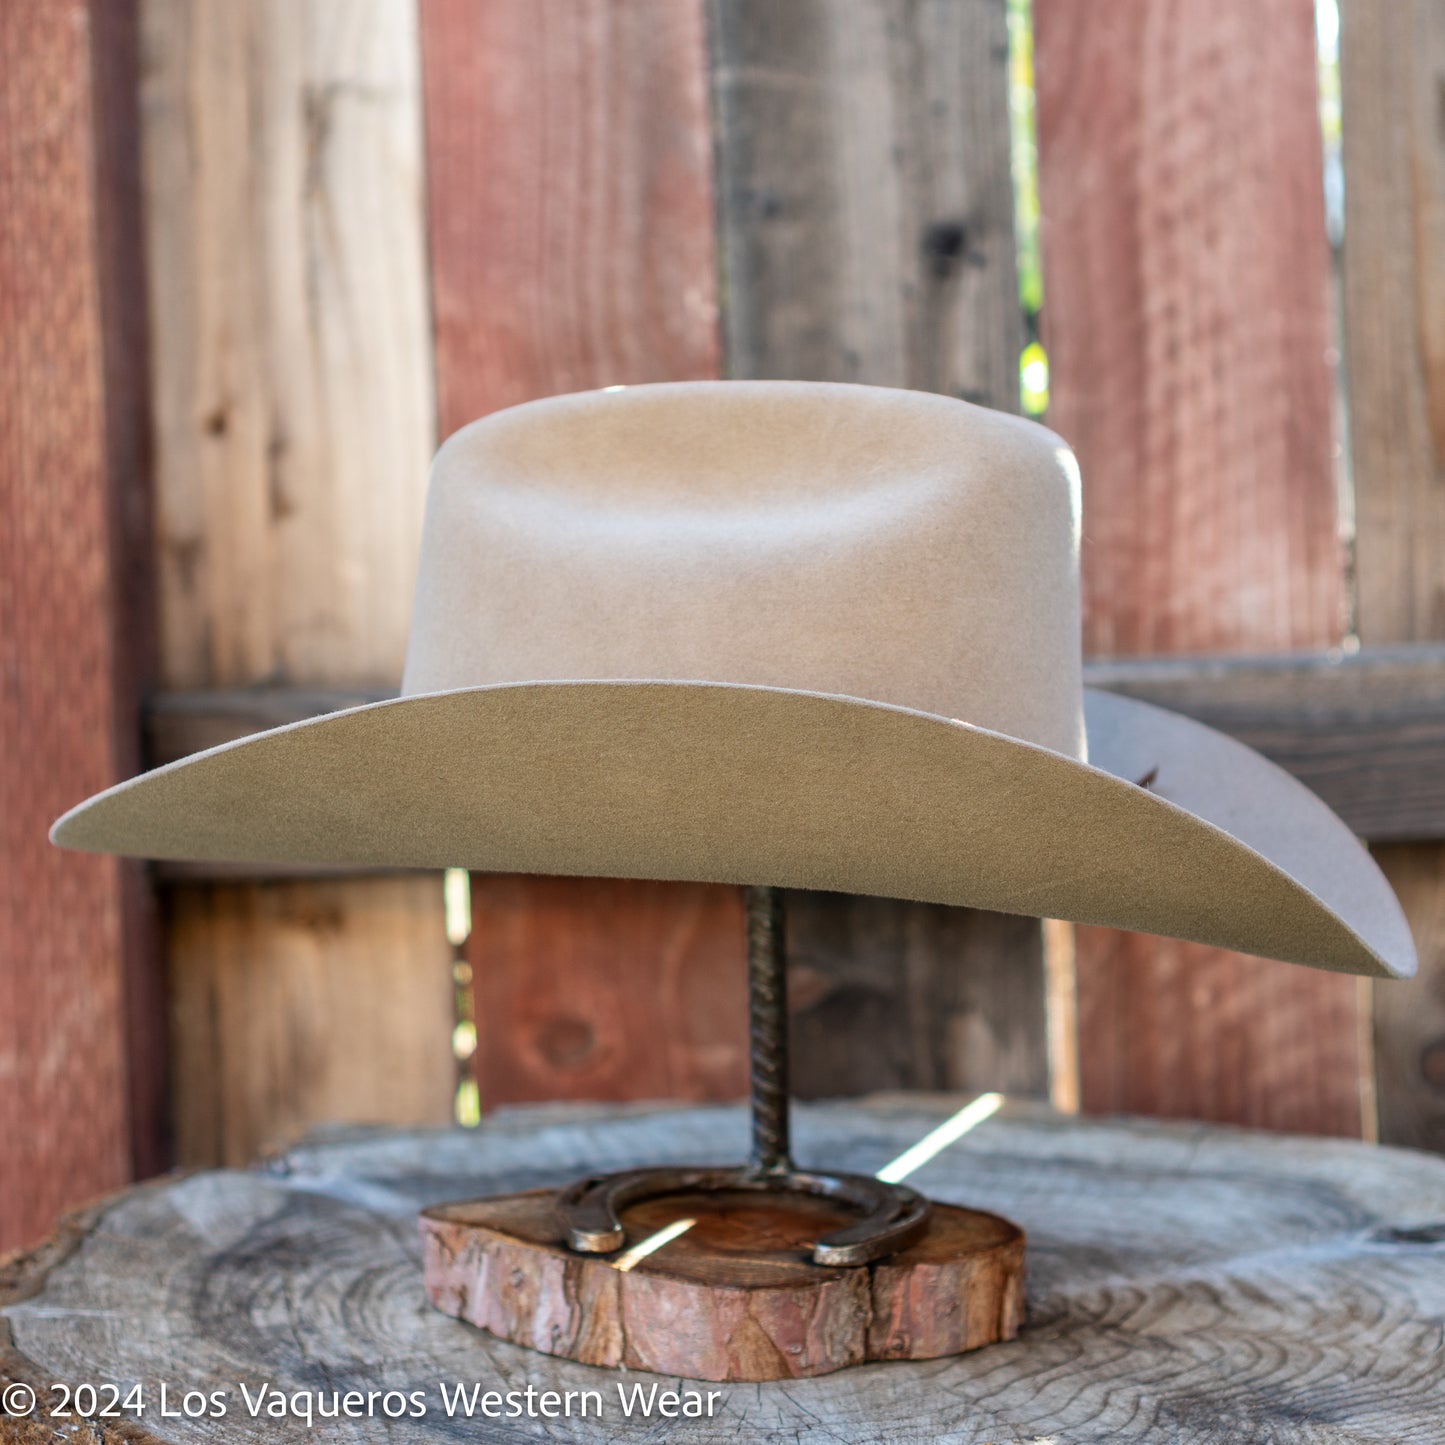 Stetson 6x Rancher Cowboy Felt Hat Sahara